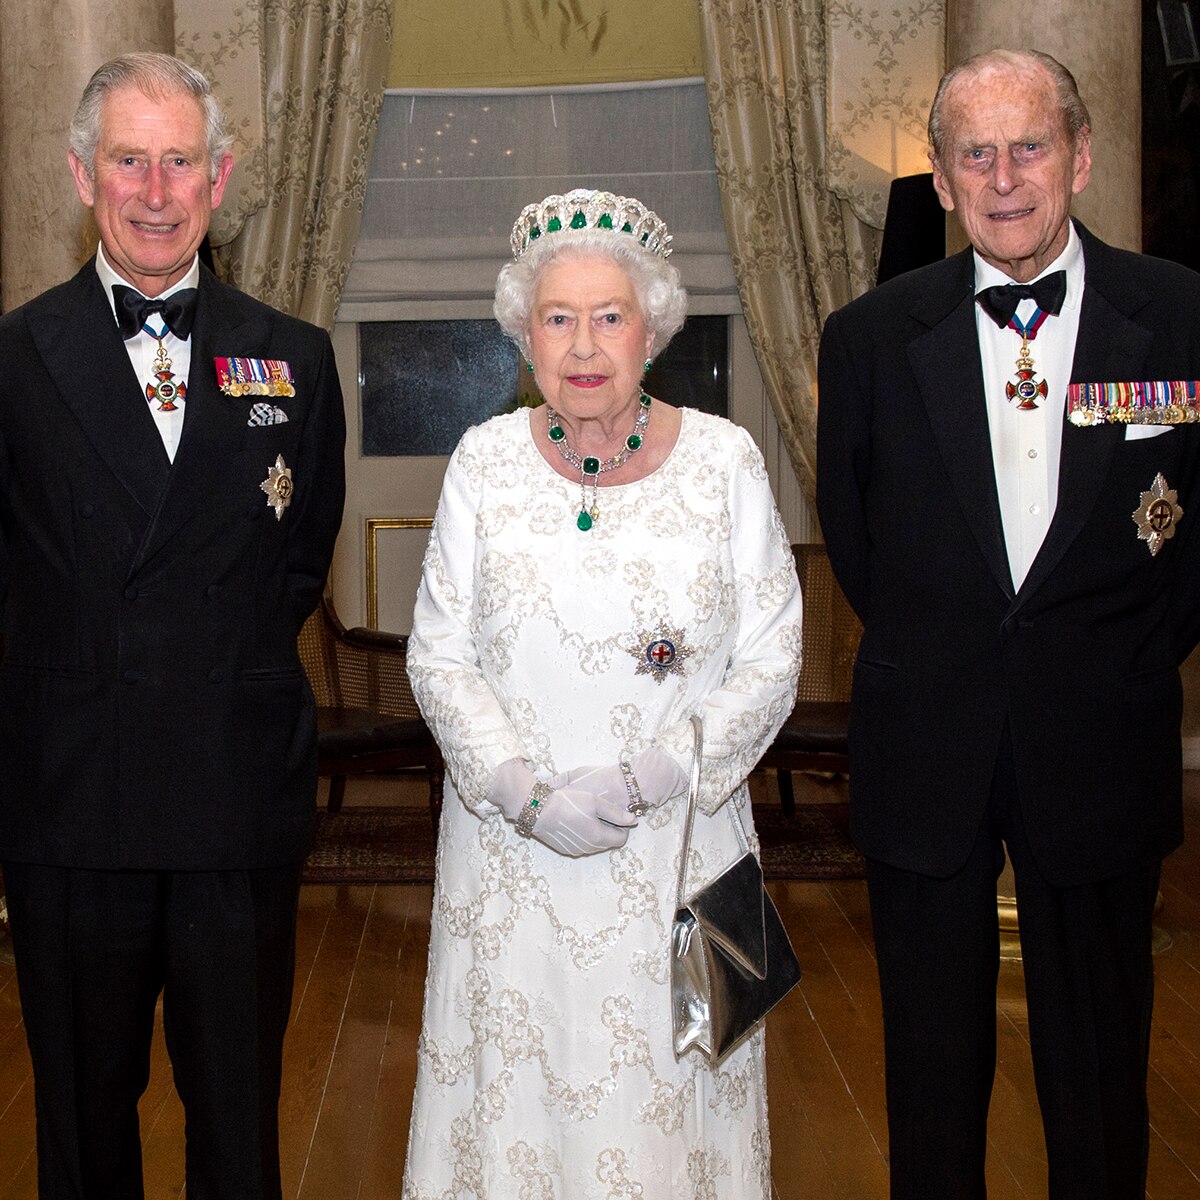 King Charles III, Queen Elizabeth II, Prince Philip 